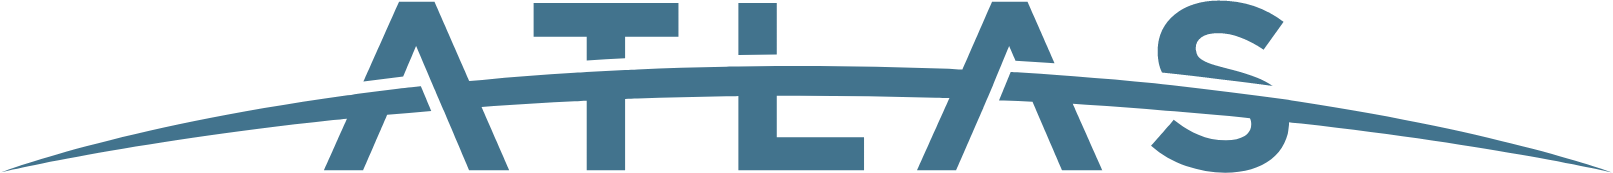 Atlas Technical Consultants logo large (transparent PNG)